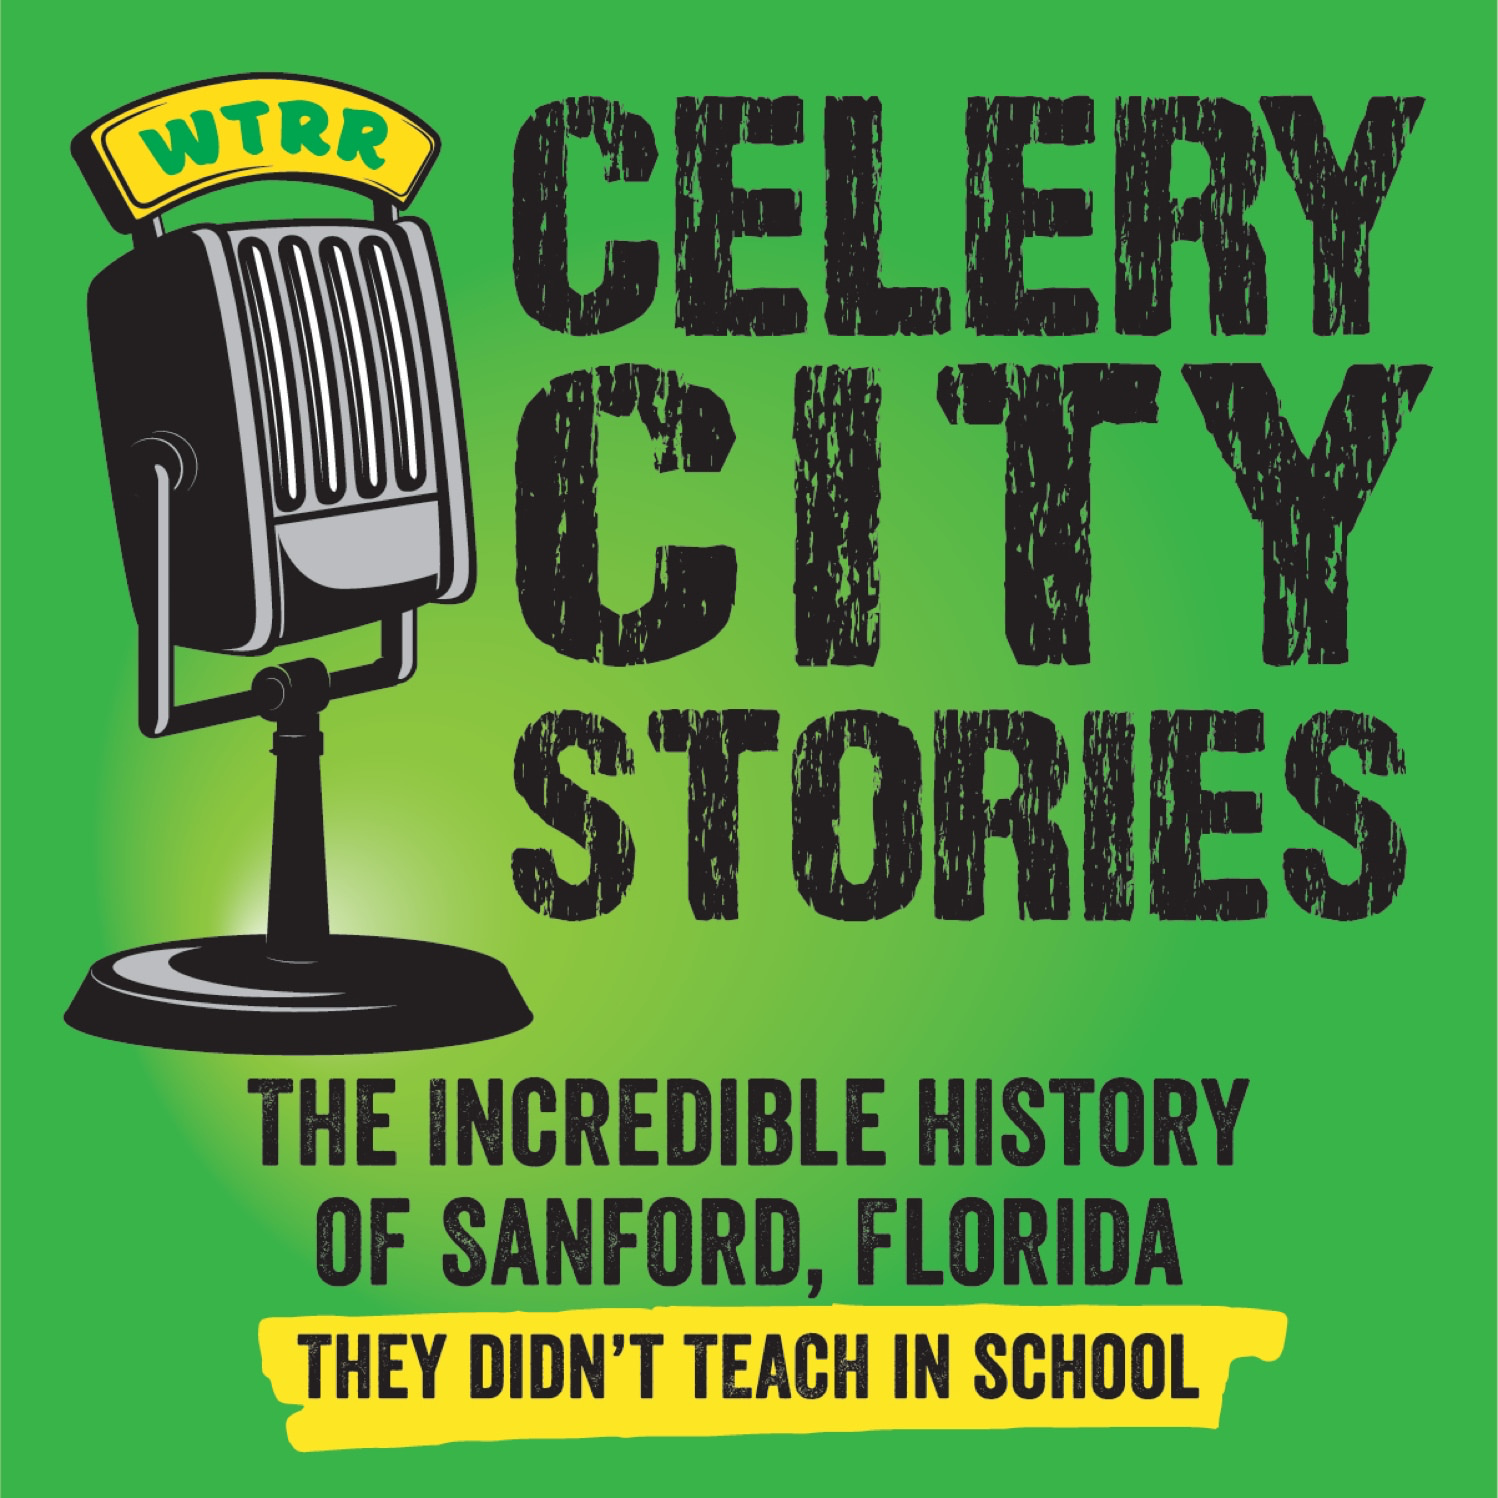 Artwork for podcast Celery City Stories